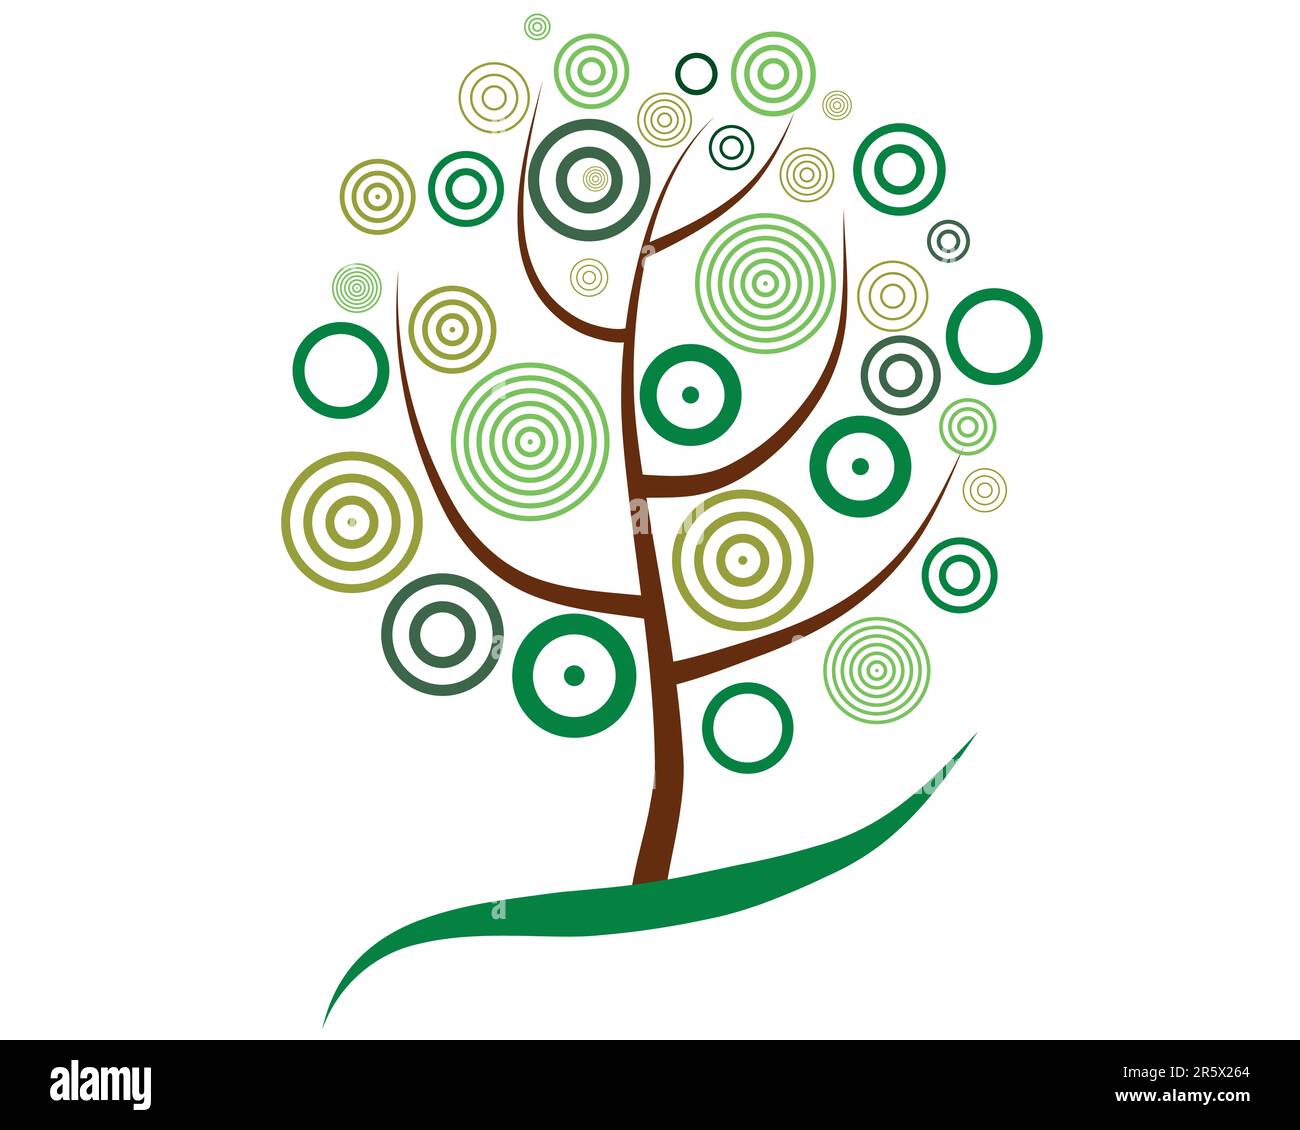 Vektor-Illustration der Baum mit Kreis-Blätter Stock Vektor